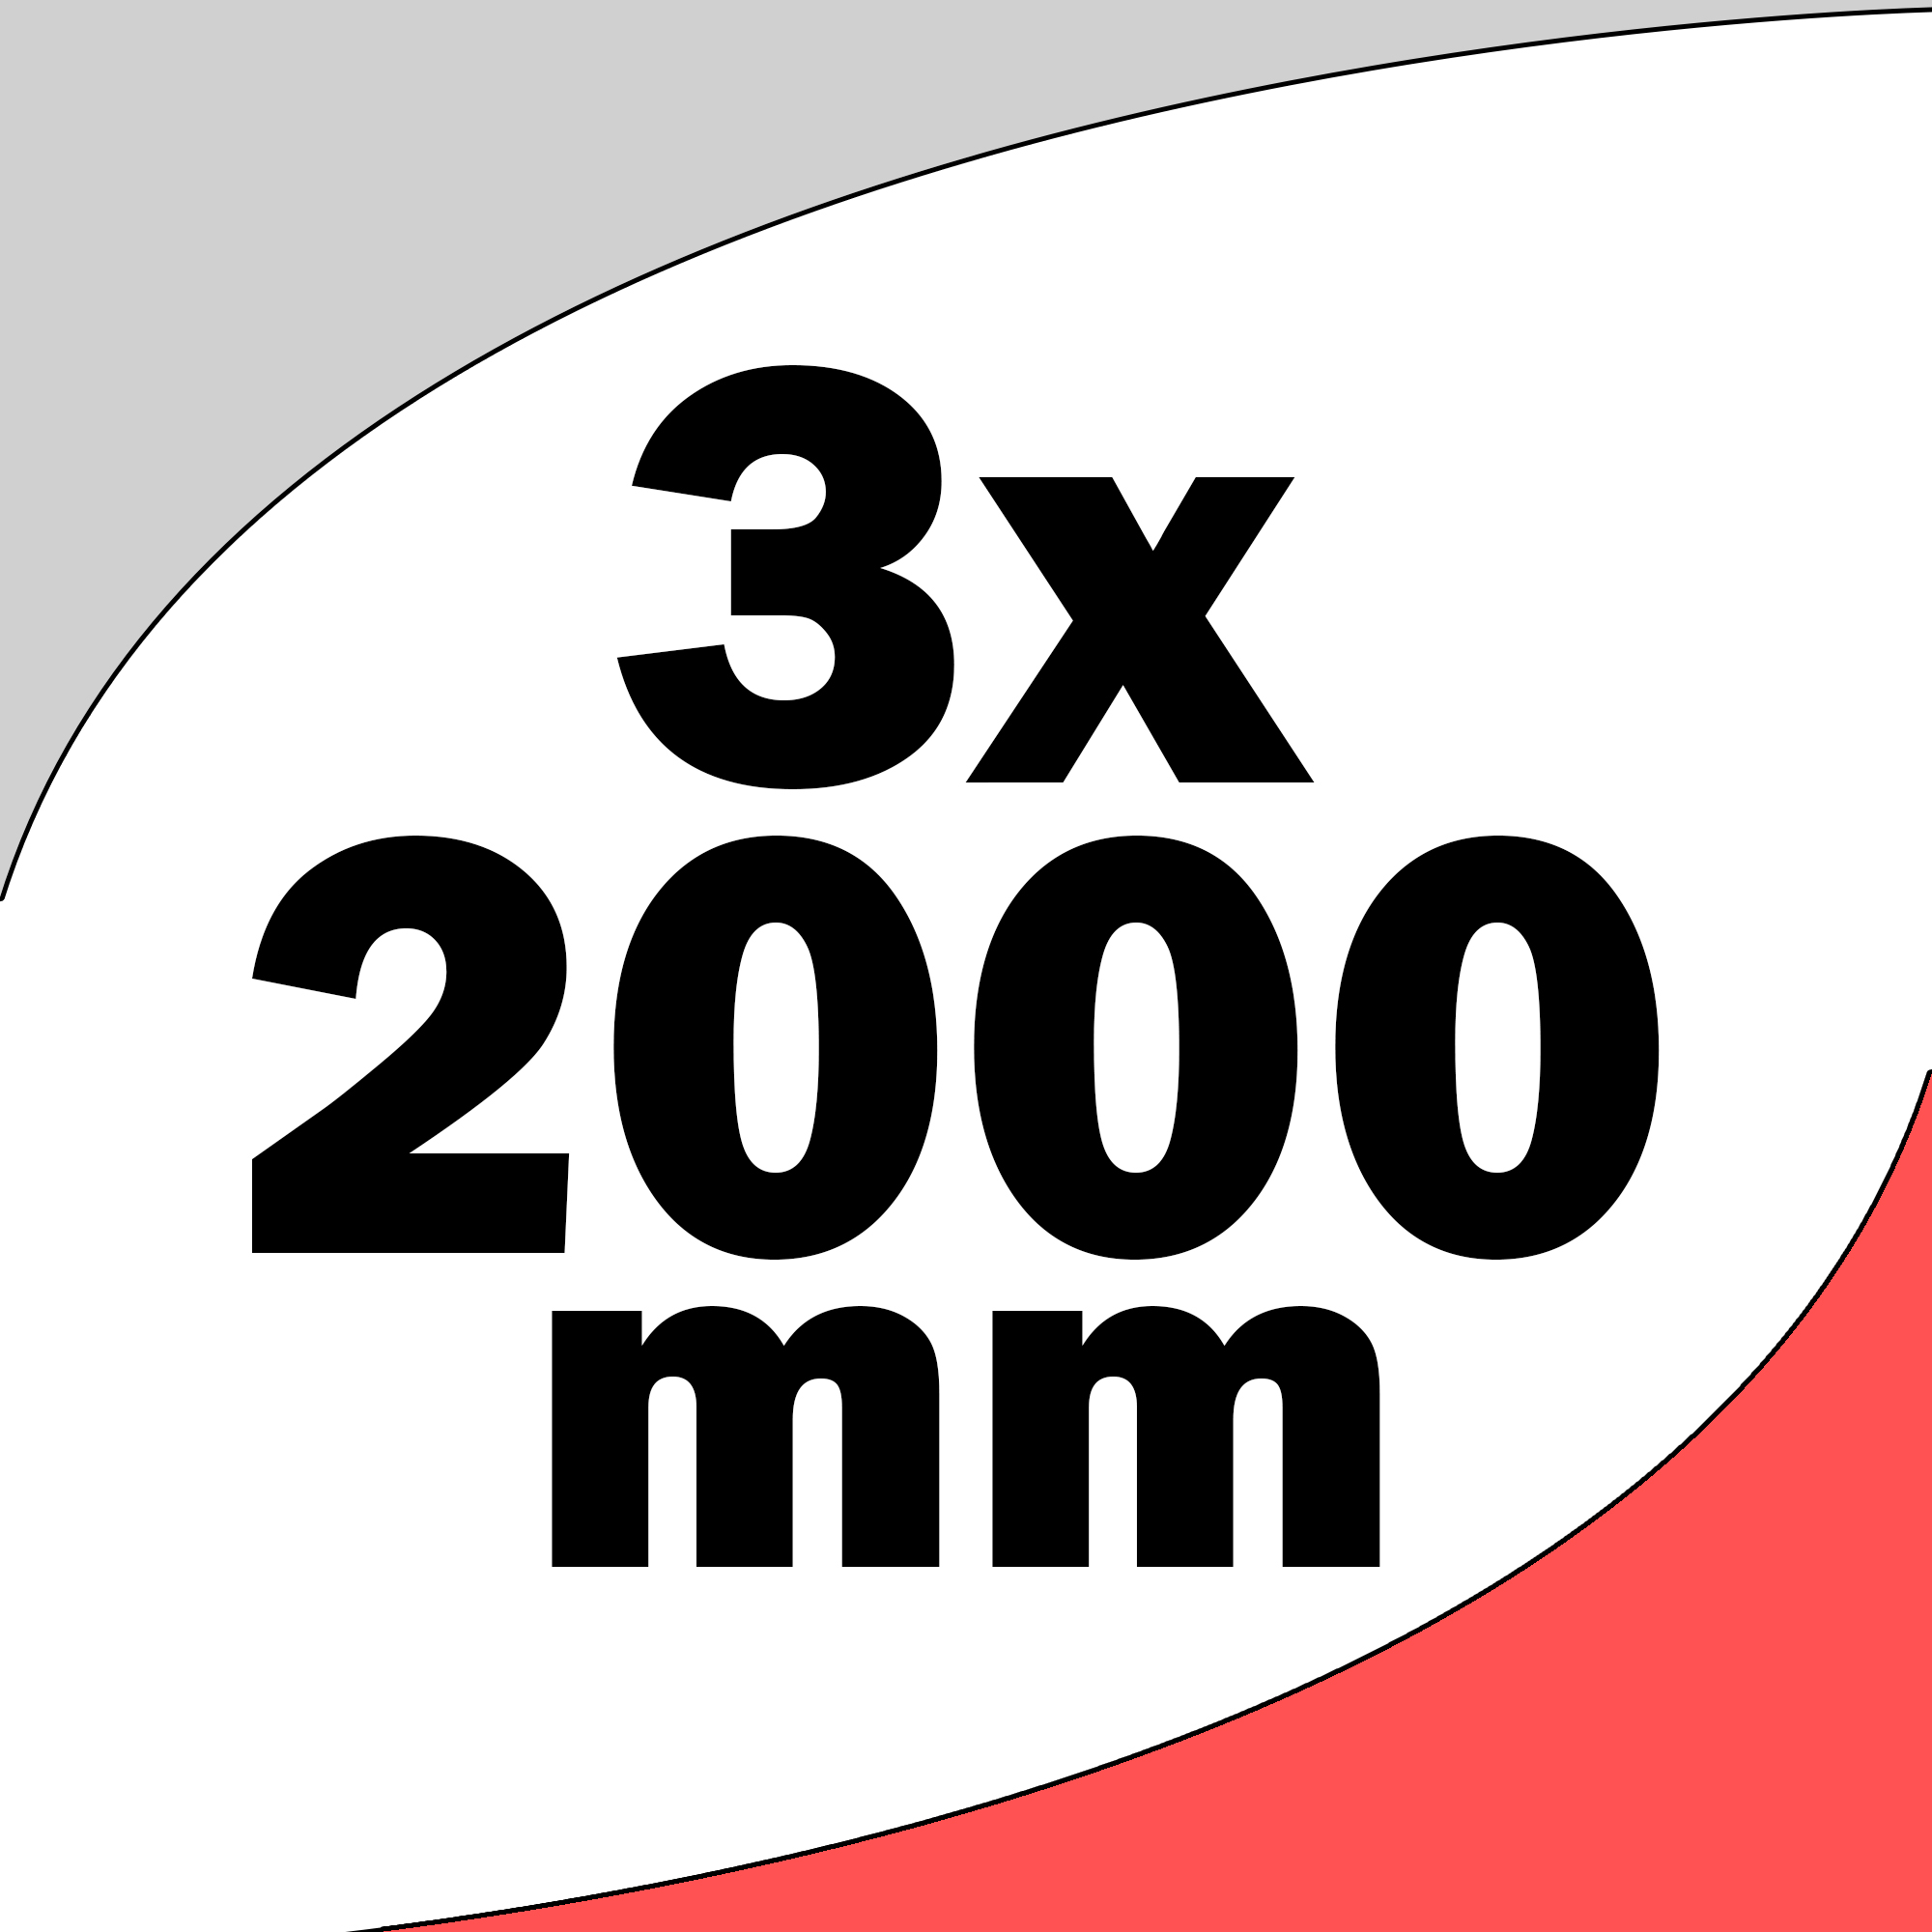 3 x 2.000 mm